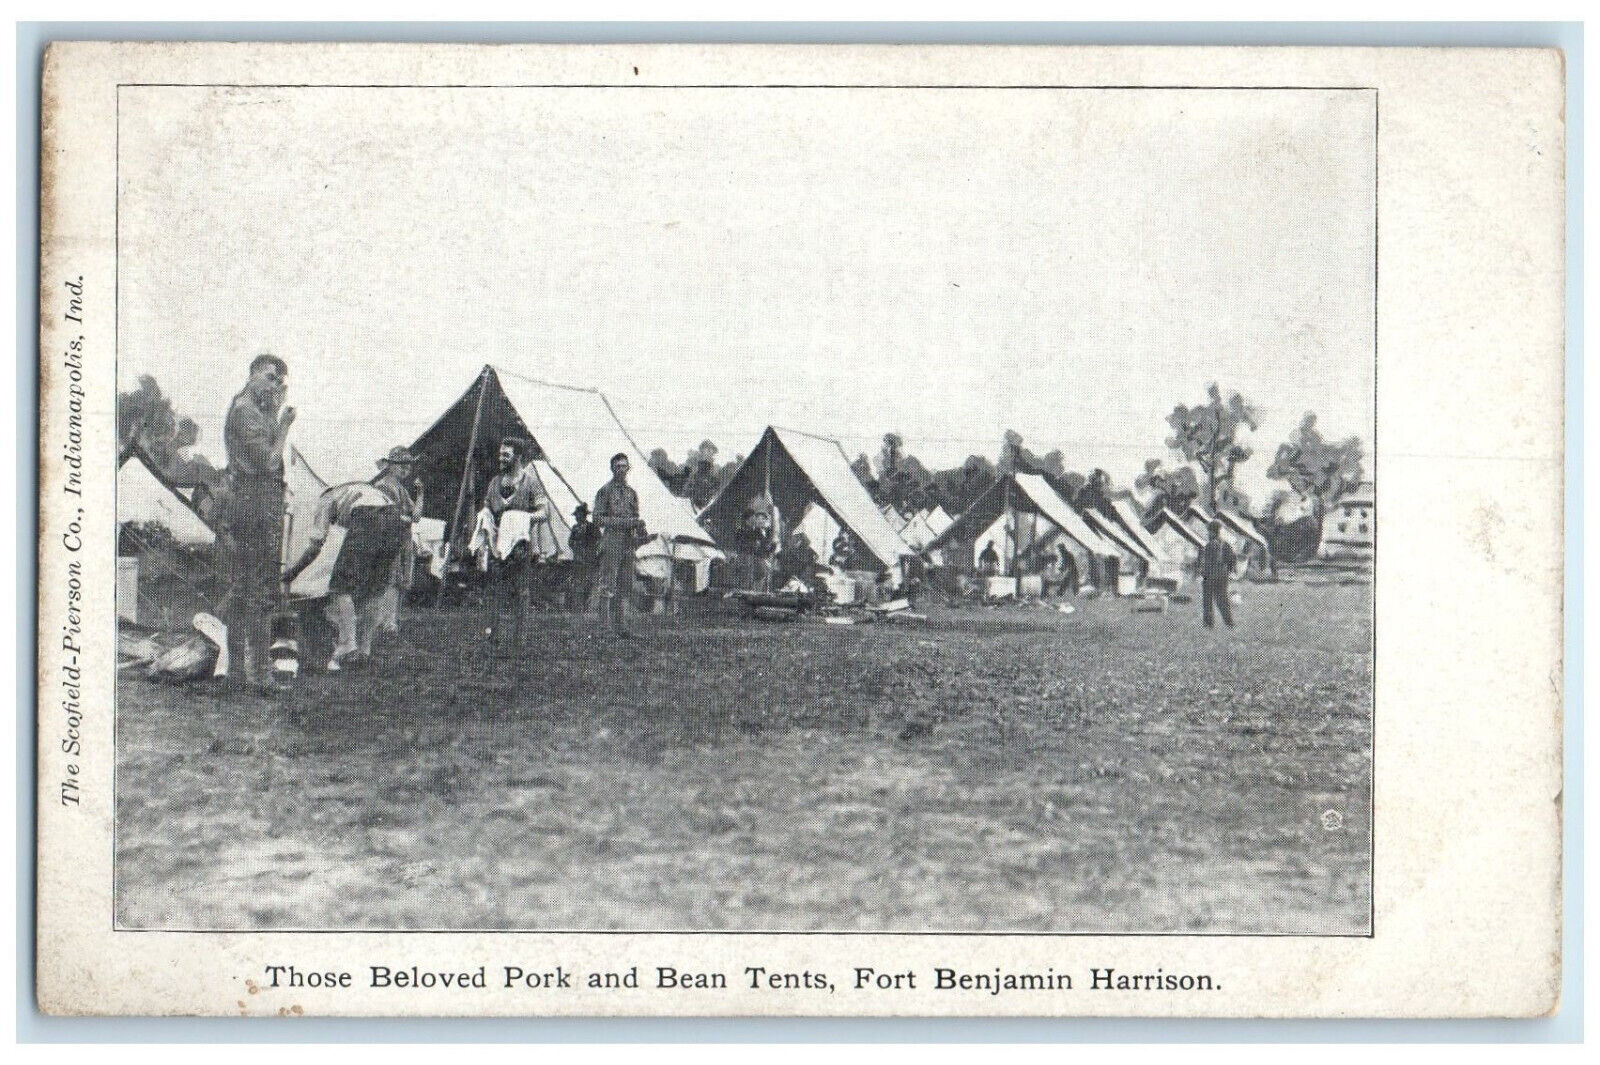 c1905 Fort Benjamin Harrison Beloved Pork and Bean Tents IN WW1 Postcard